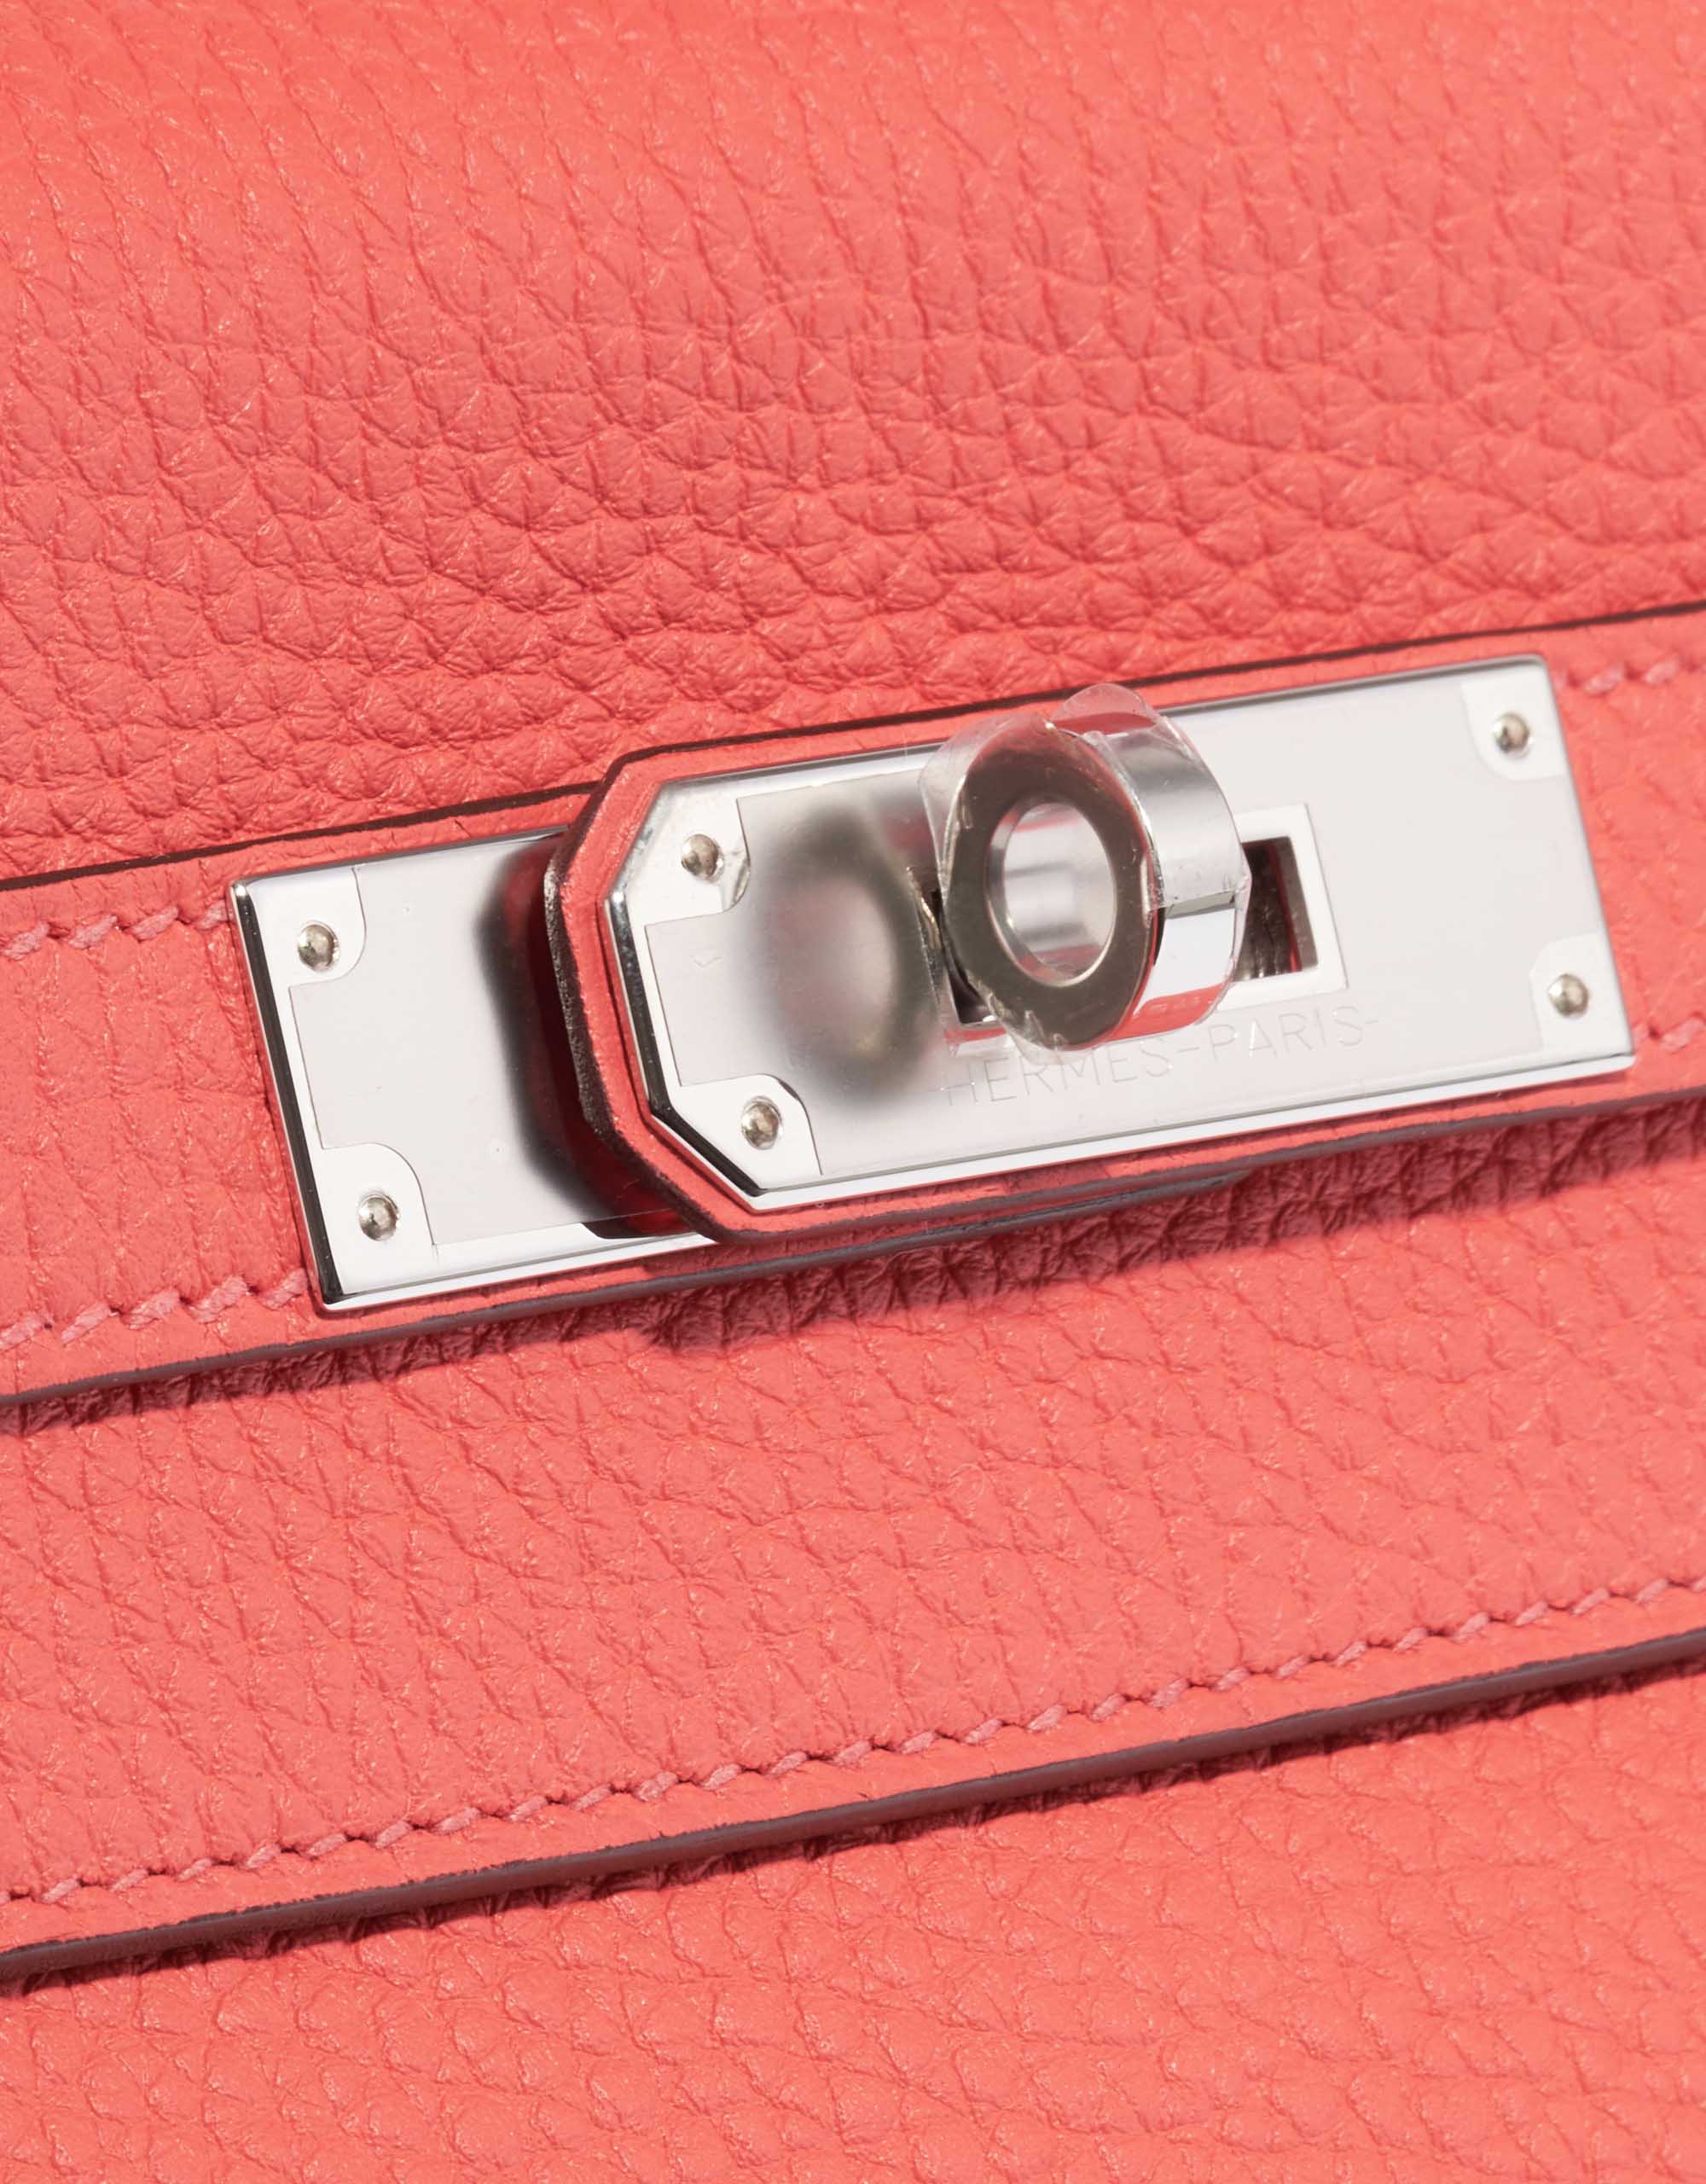 58013: Hermès 28cm Rose Confetti Epsom Leather Kelly S